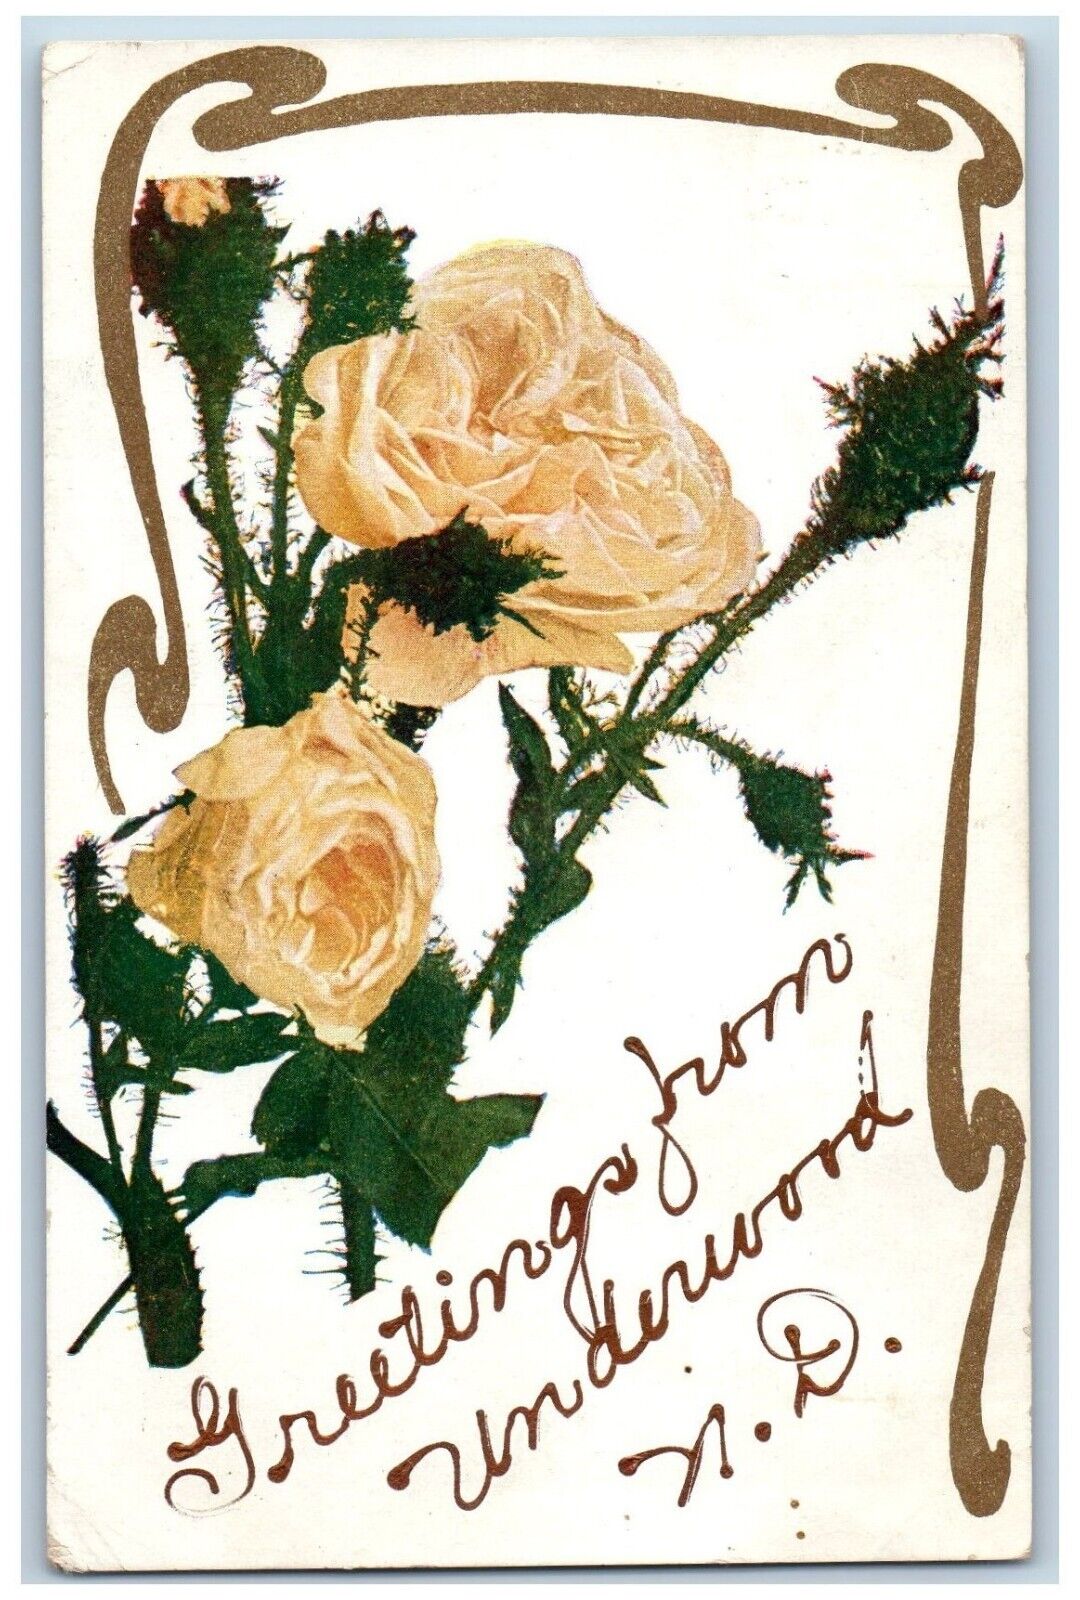 Underwood North Dakota ND Postcard Greetings Roses Glitter 1908 Vintage Antique